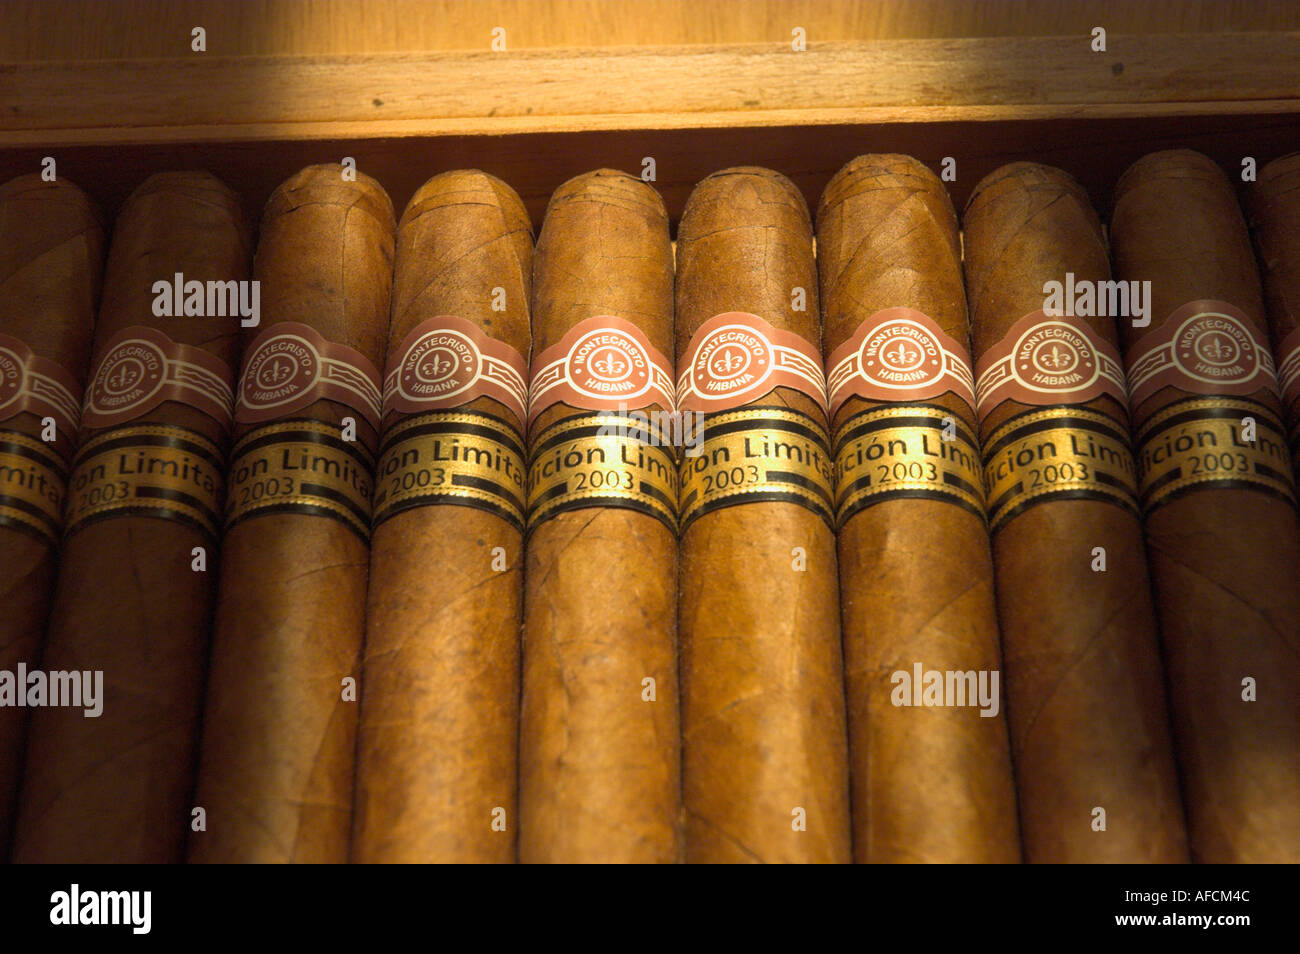 Kuba-Havanna-Zigarren in einer Box Monte Cristo limitierten Auflage hautnah Stockfoto